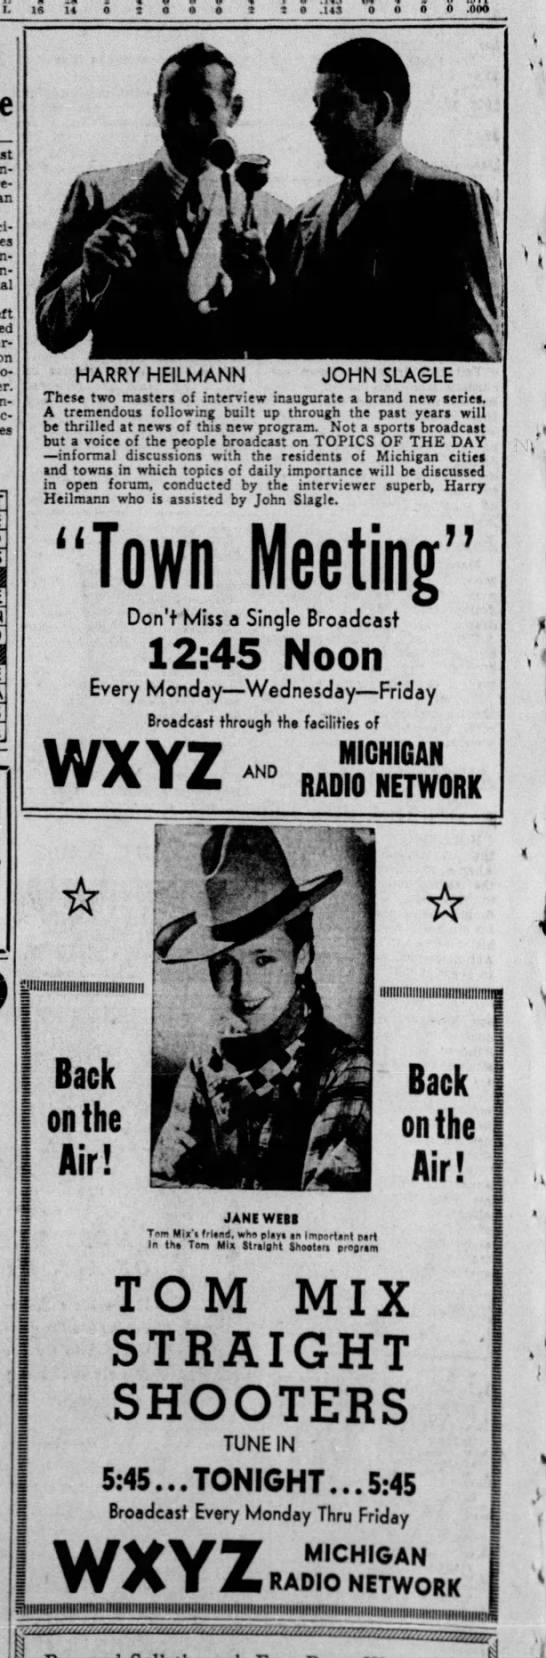 WXYZ advertisement "Town Meeting" - 